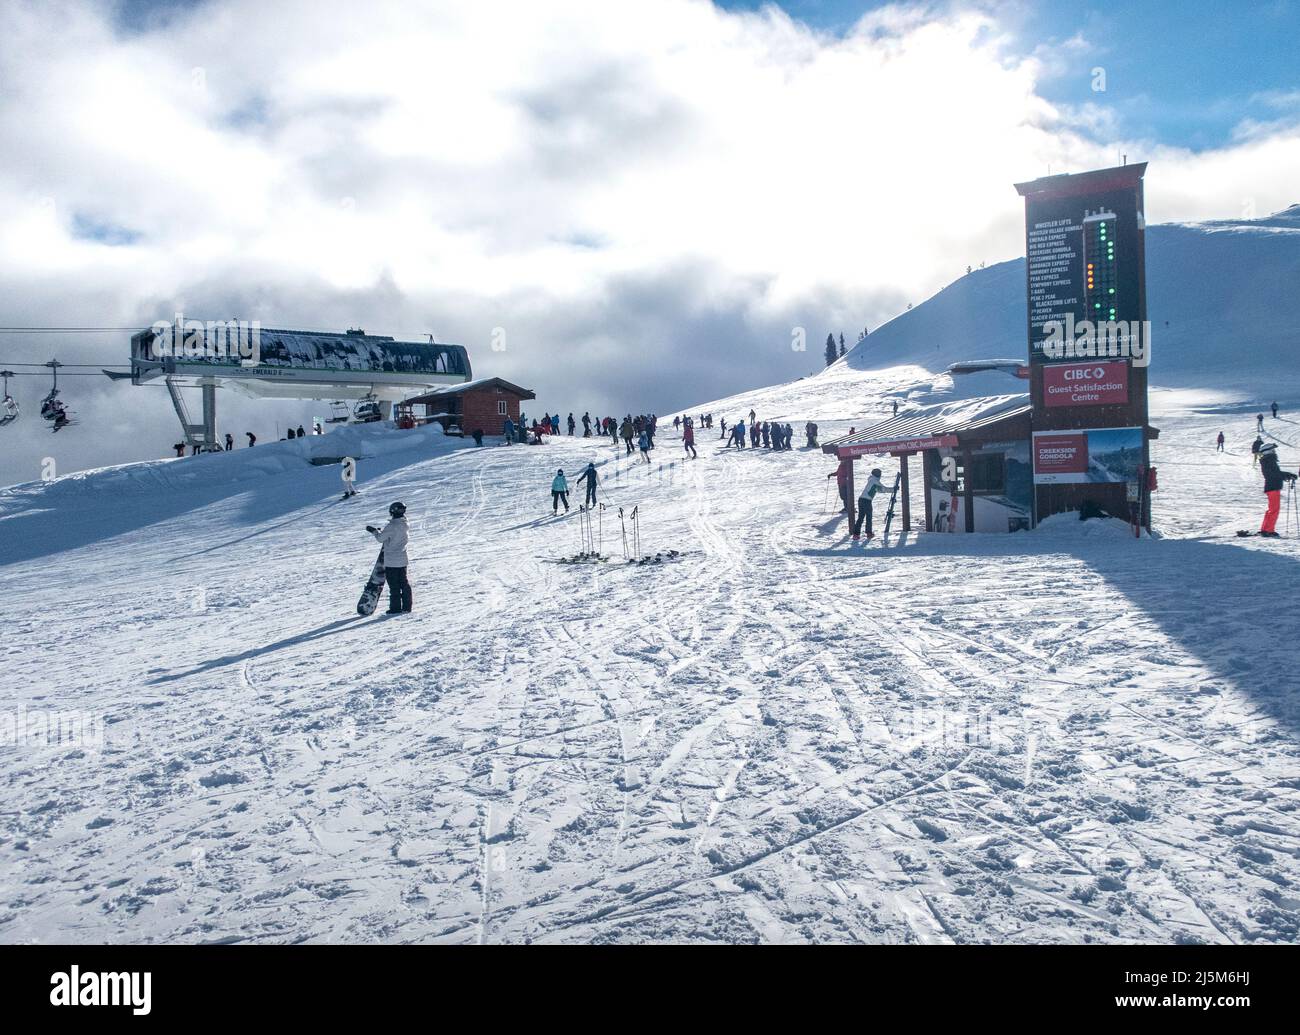 Top of Whistler Mountain Ski Resort in der Nähe des Emeral Express Sessellifts Stockfoto